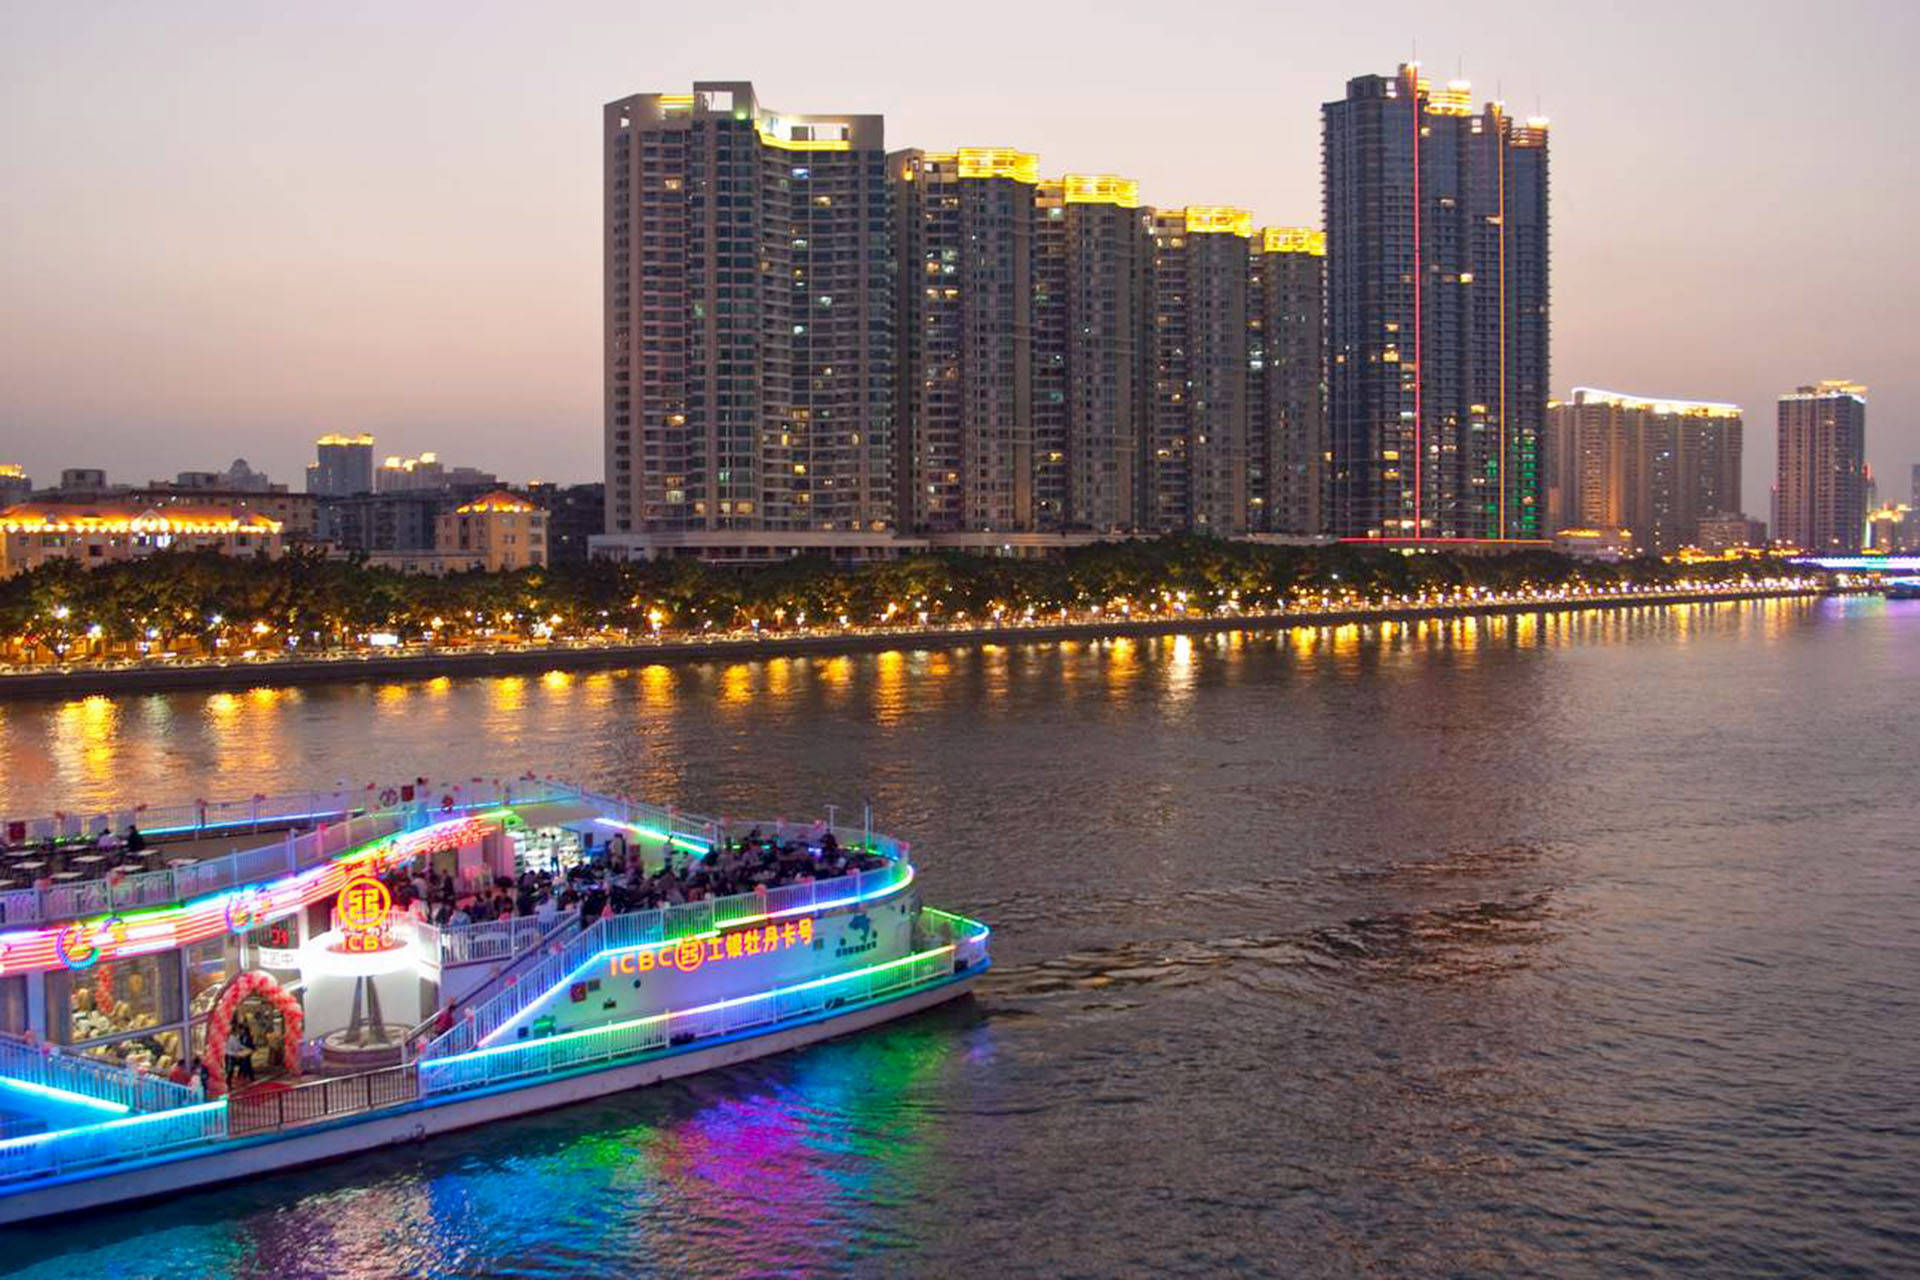 Guangzhou Night Cruise Background